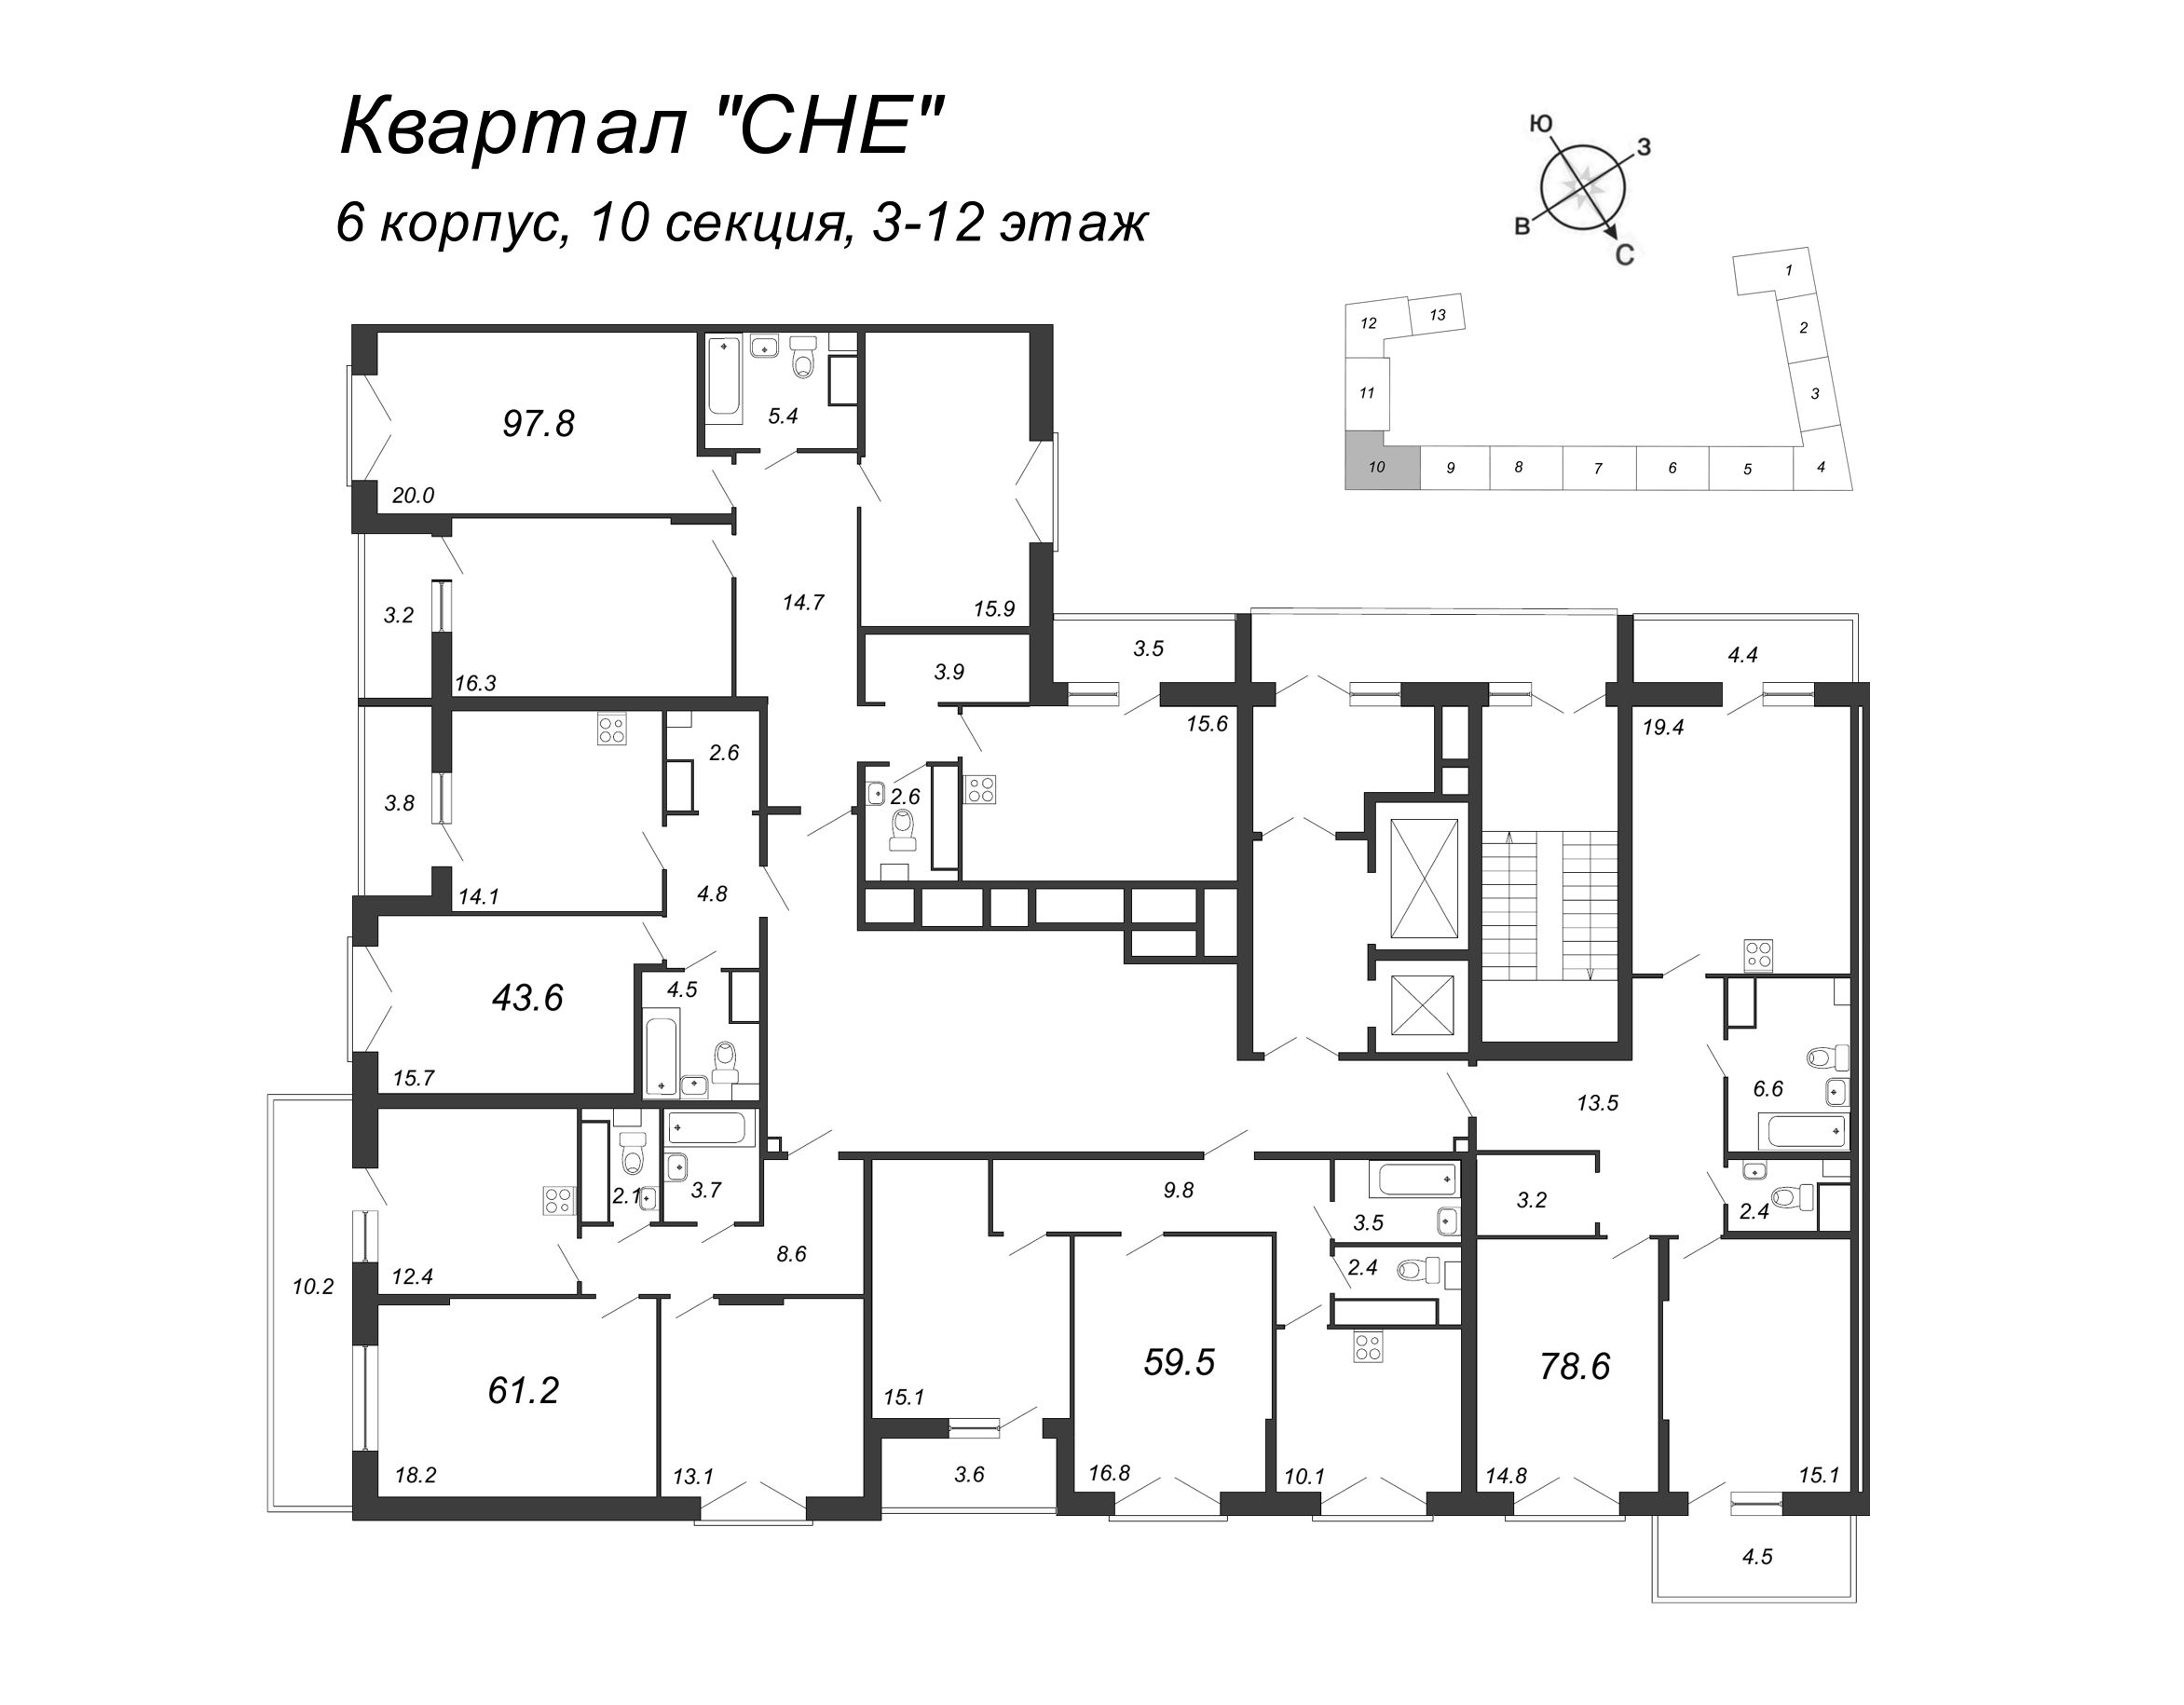 2-комнатная квартира, 61.7 м² в ЖК "Квартал Che" - планировка этажа